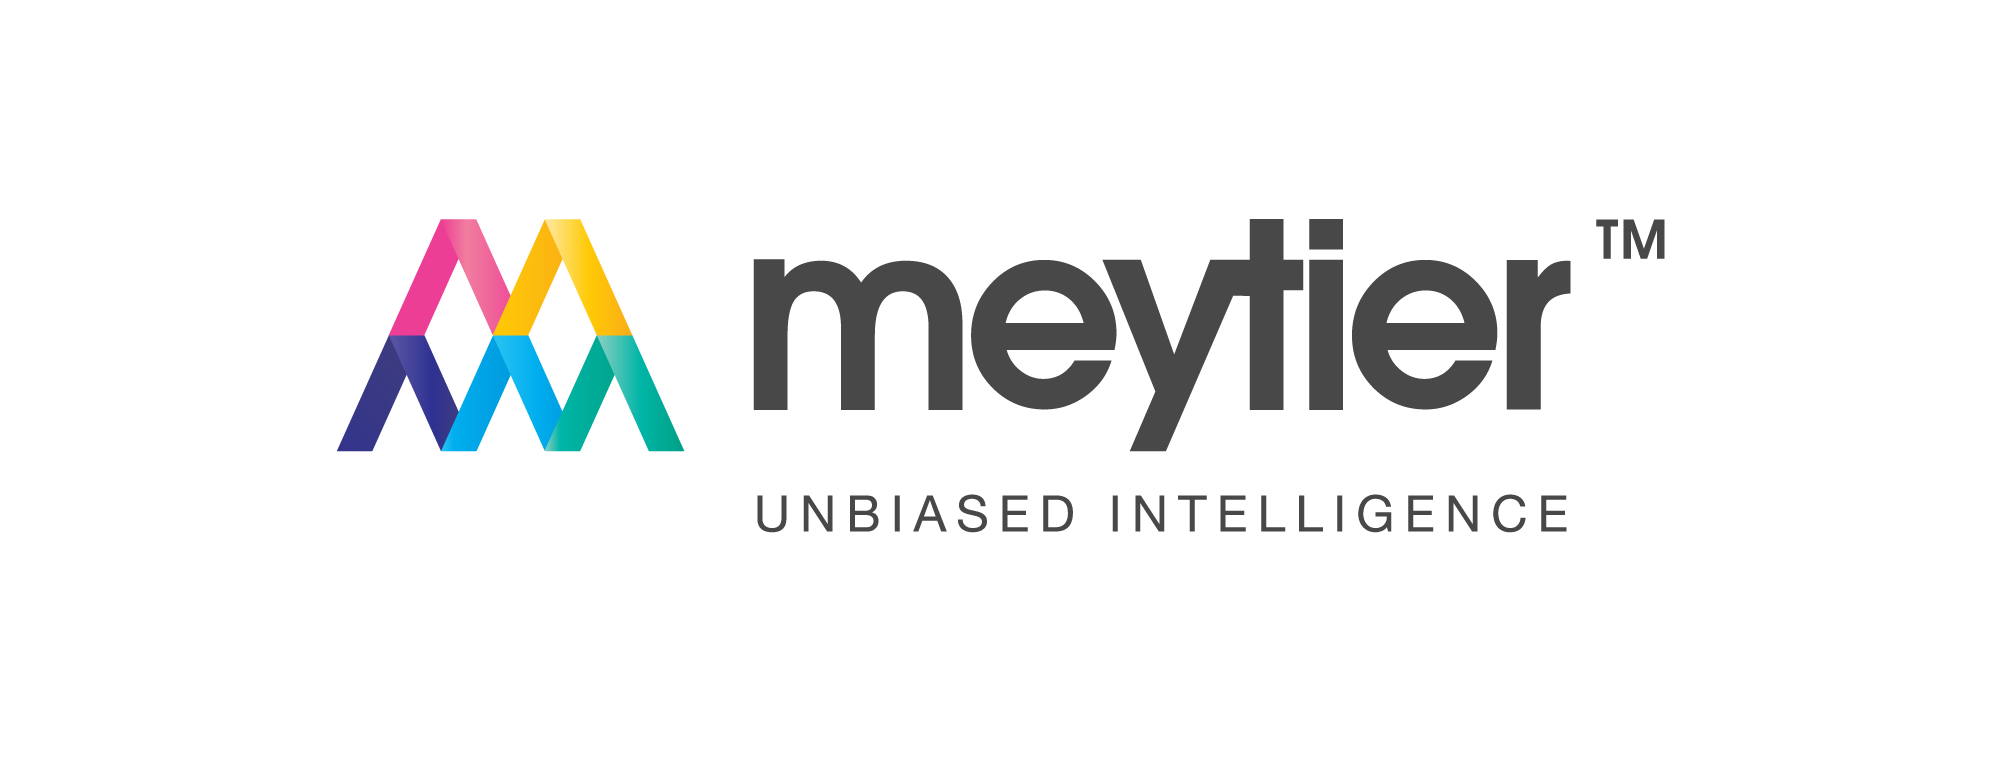 Meytier Logo